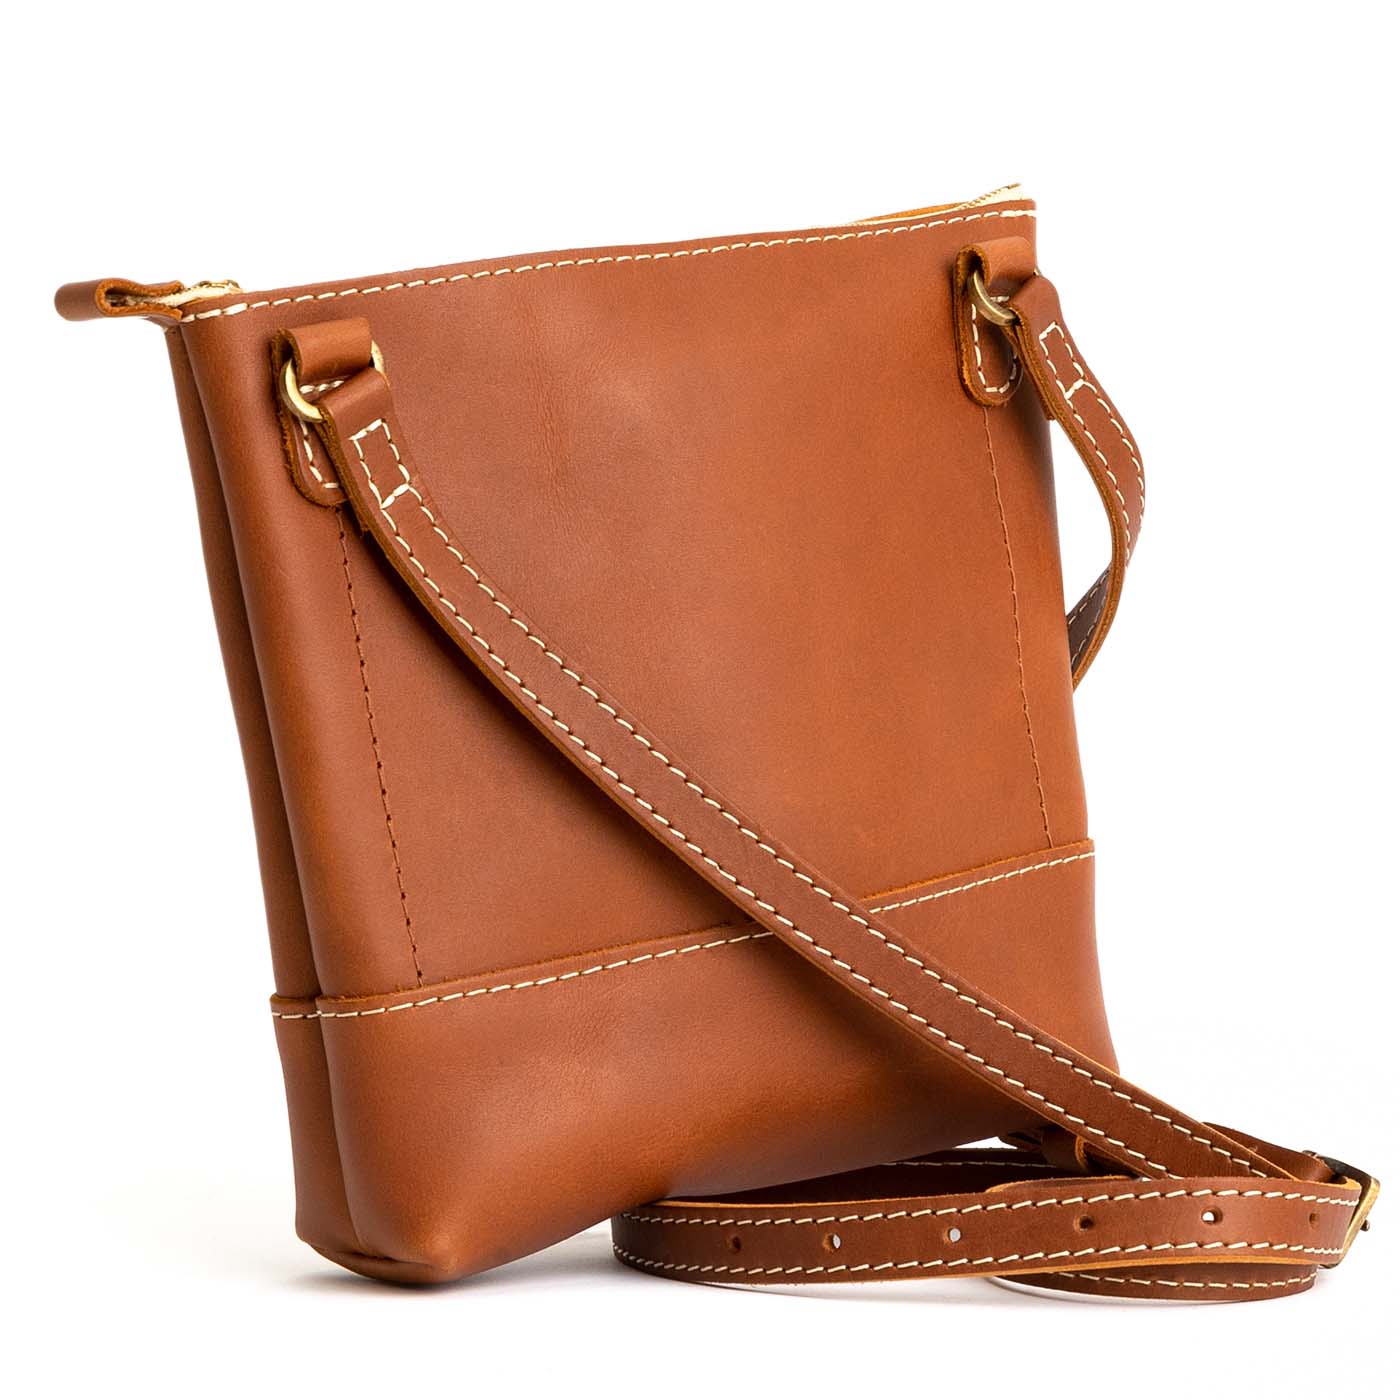 All Color: Honey | handmade leather crossbody purse